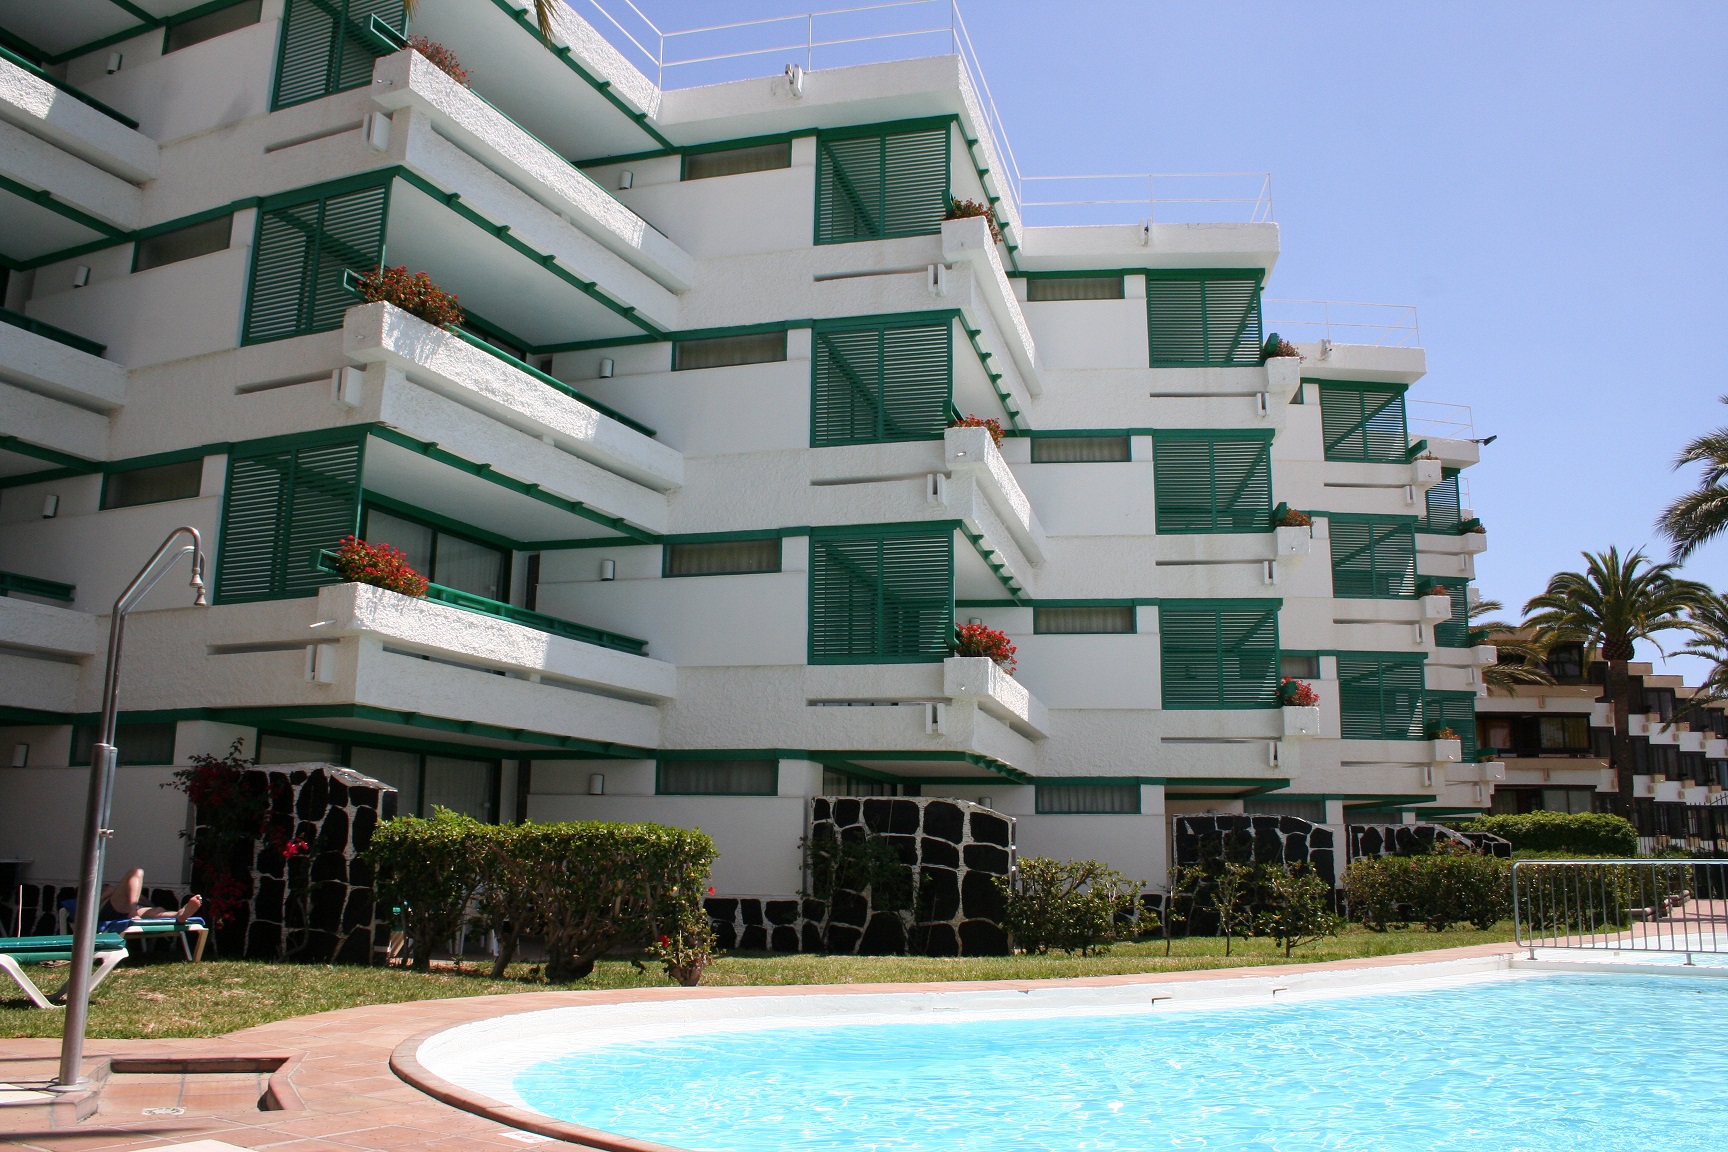 Apartamentos Maba Playa